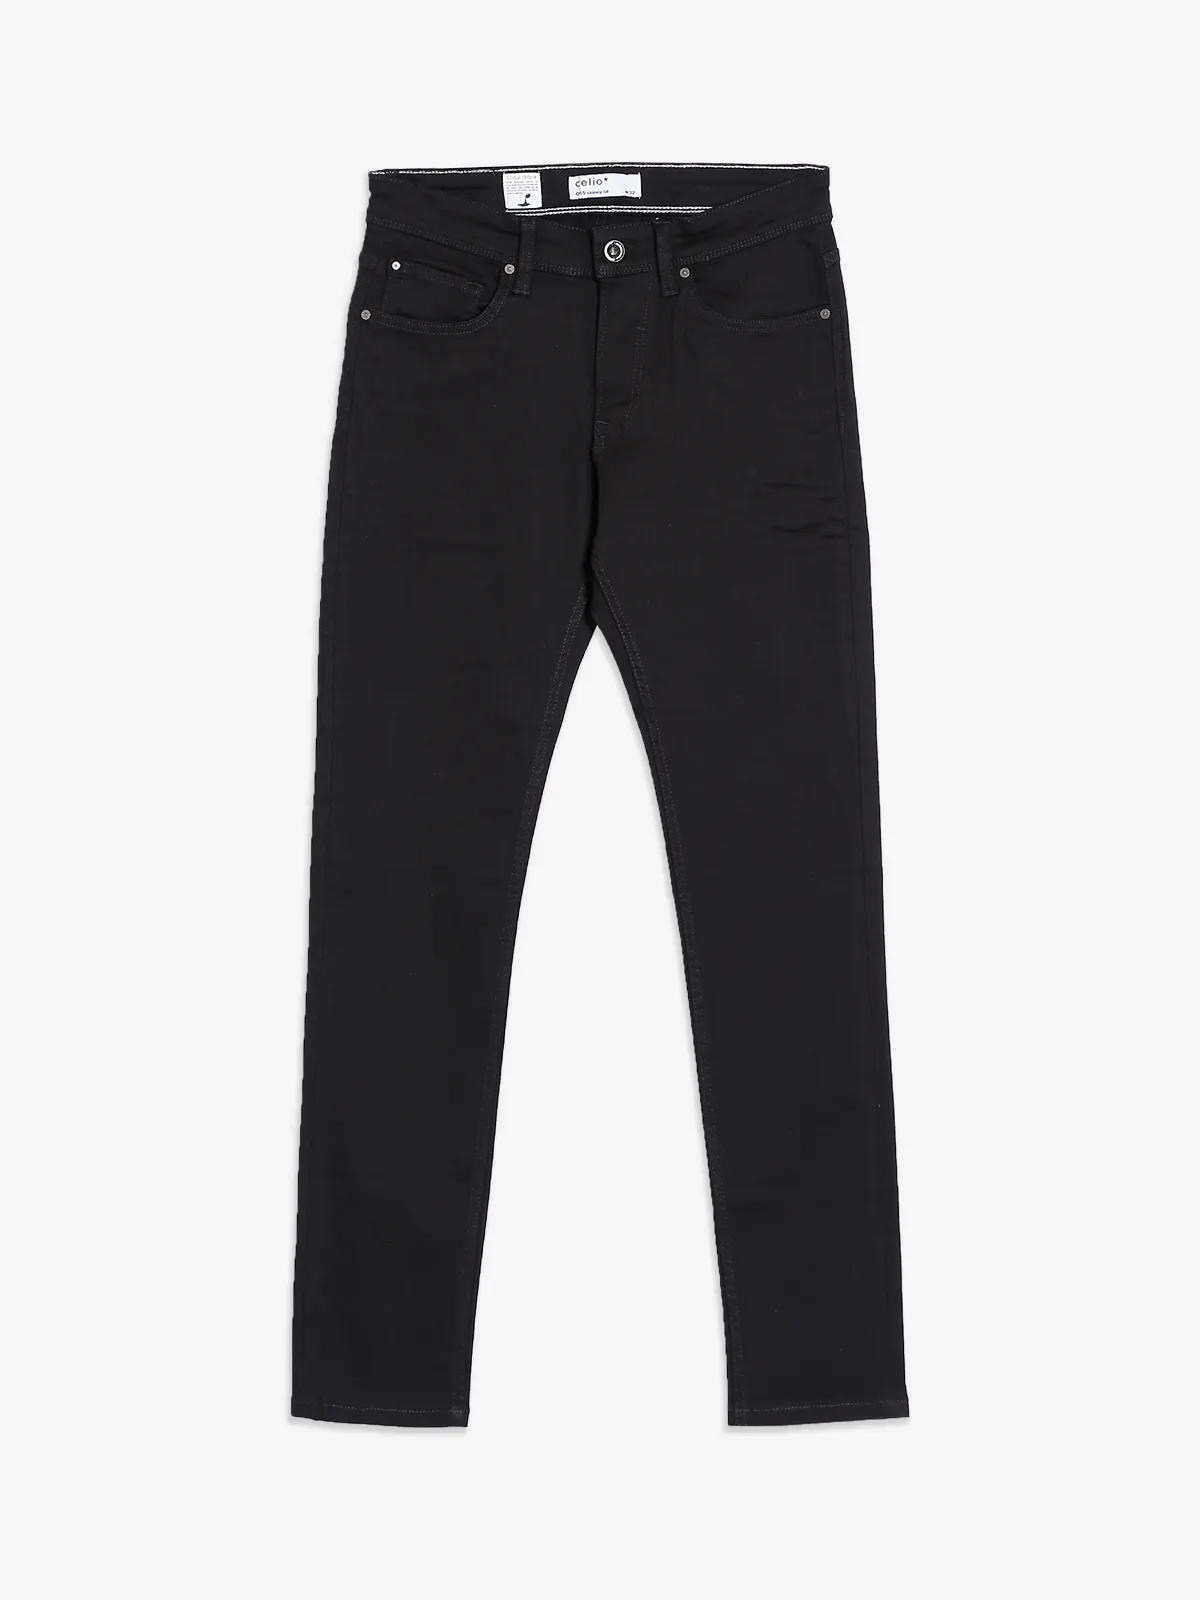 Celio black solid jeans